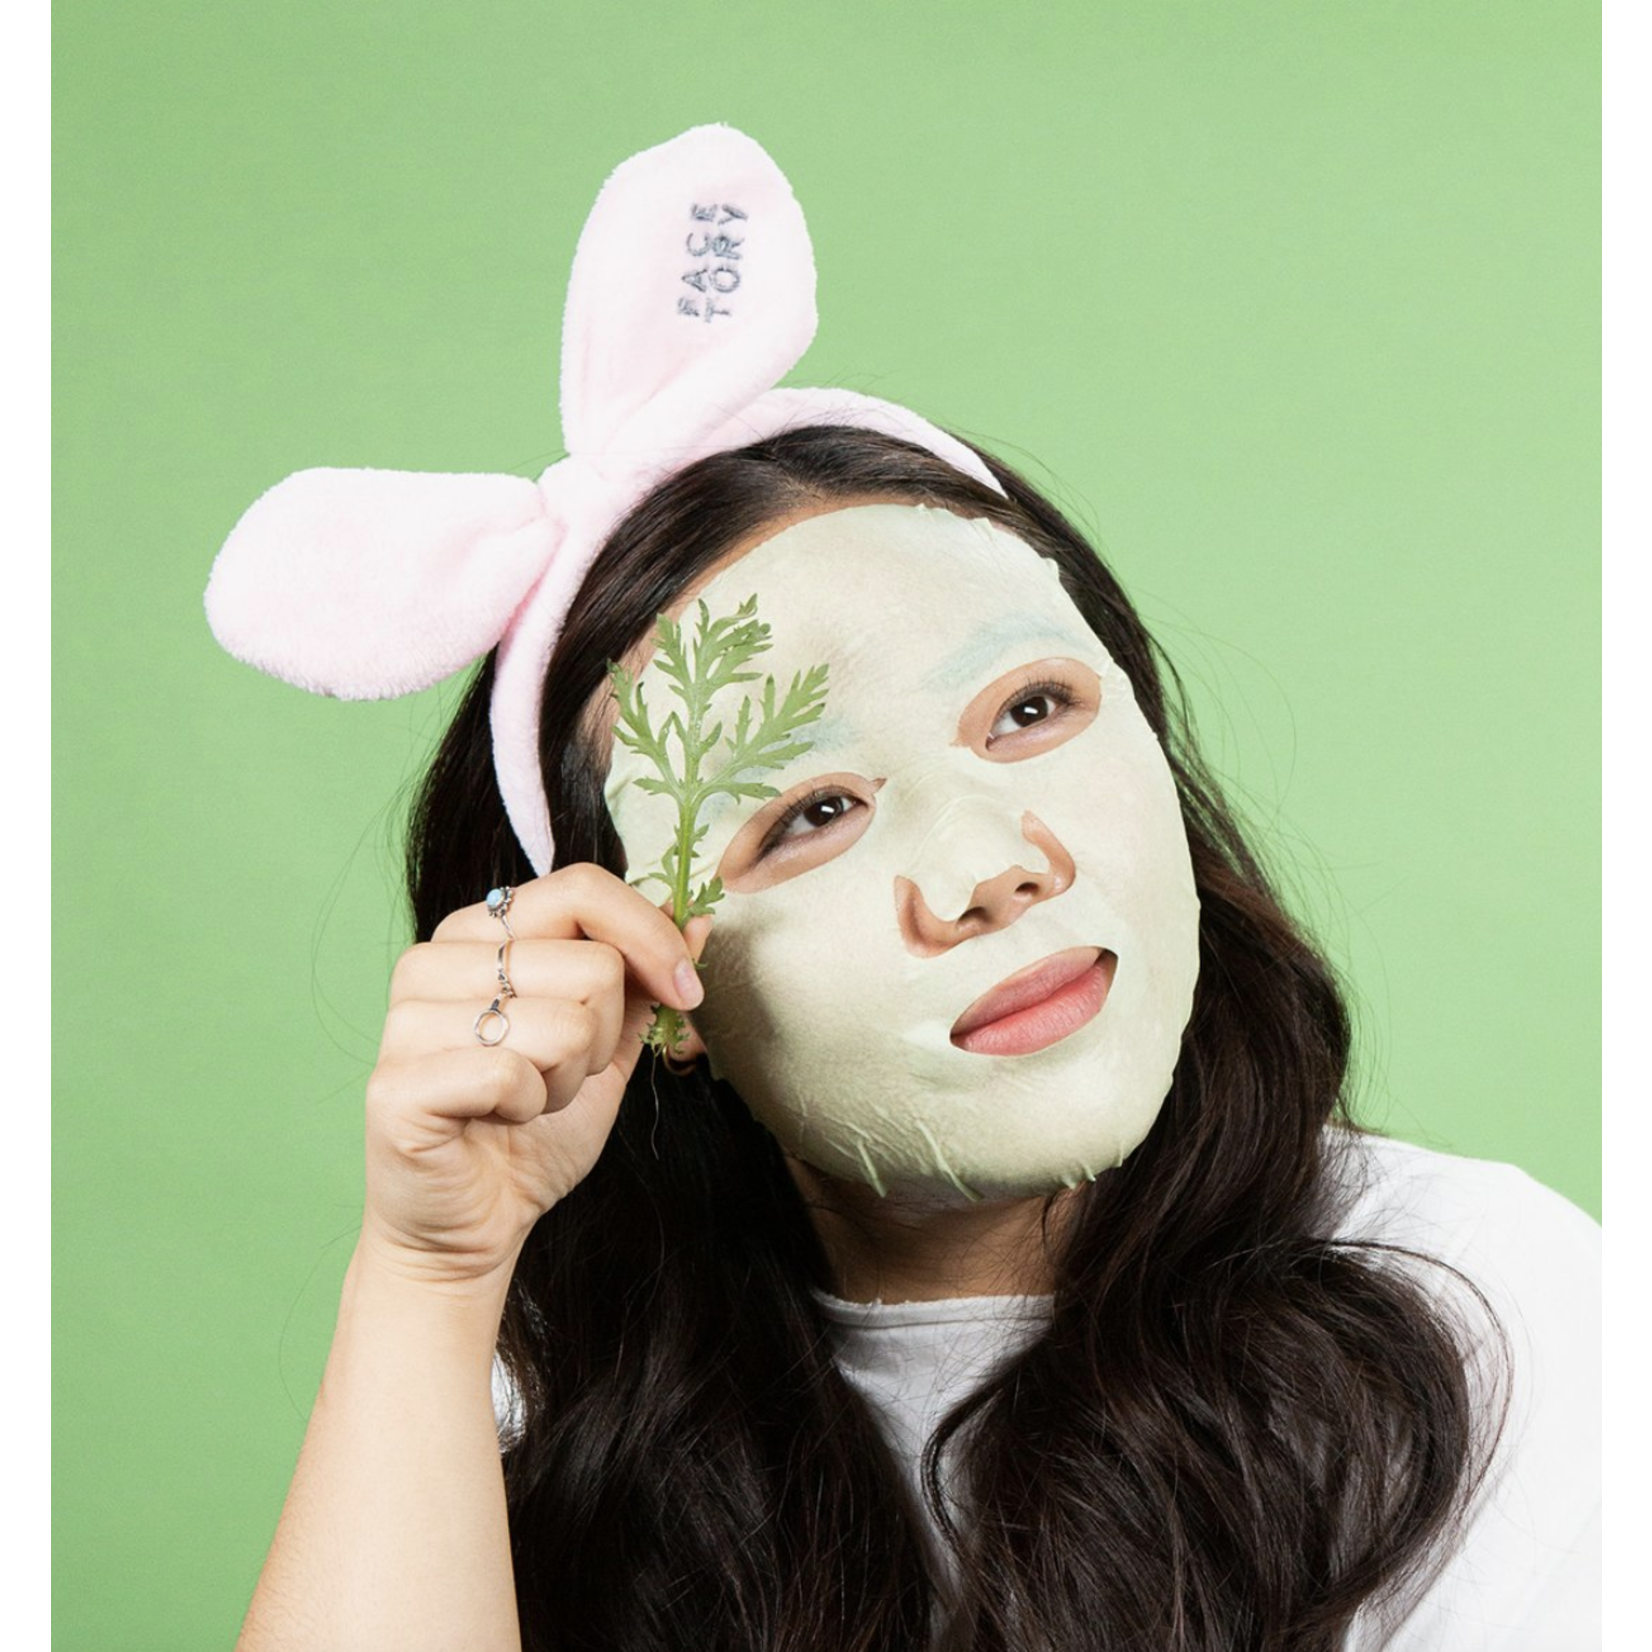 FaceTory Artemisia Refreshing Relief Facial Sheet Mask